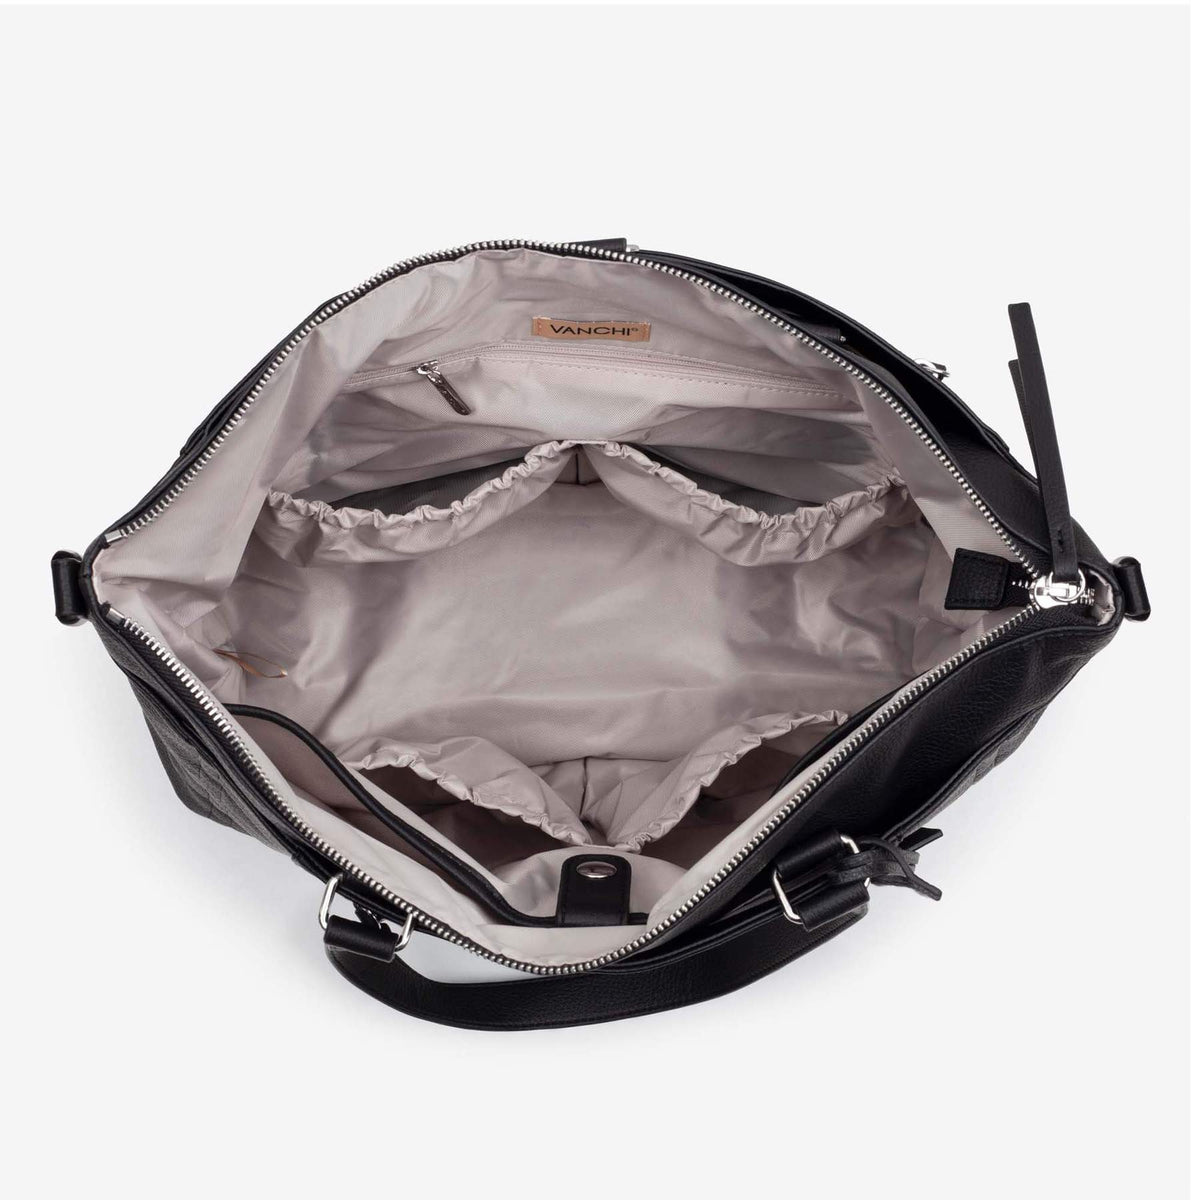 VANCHI - Billie Convertible Backpack / Tote Baby Bag - Black